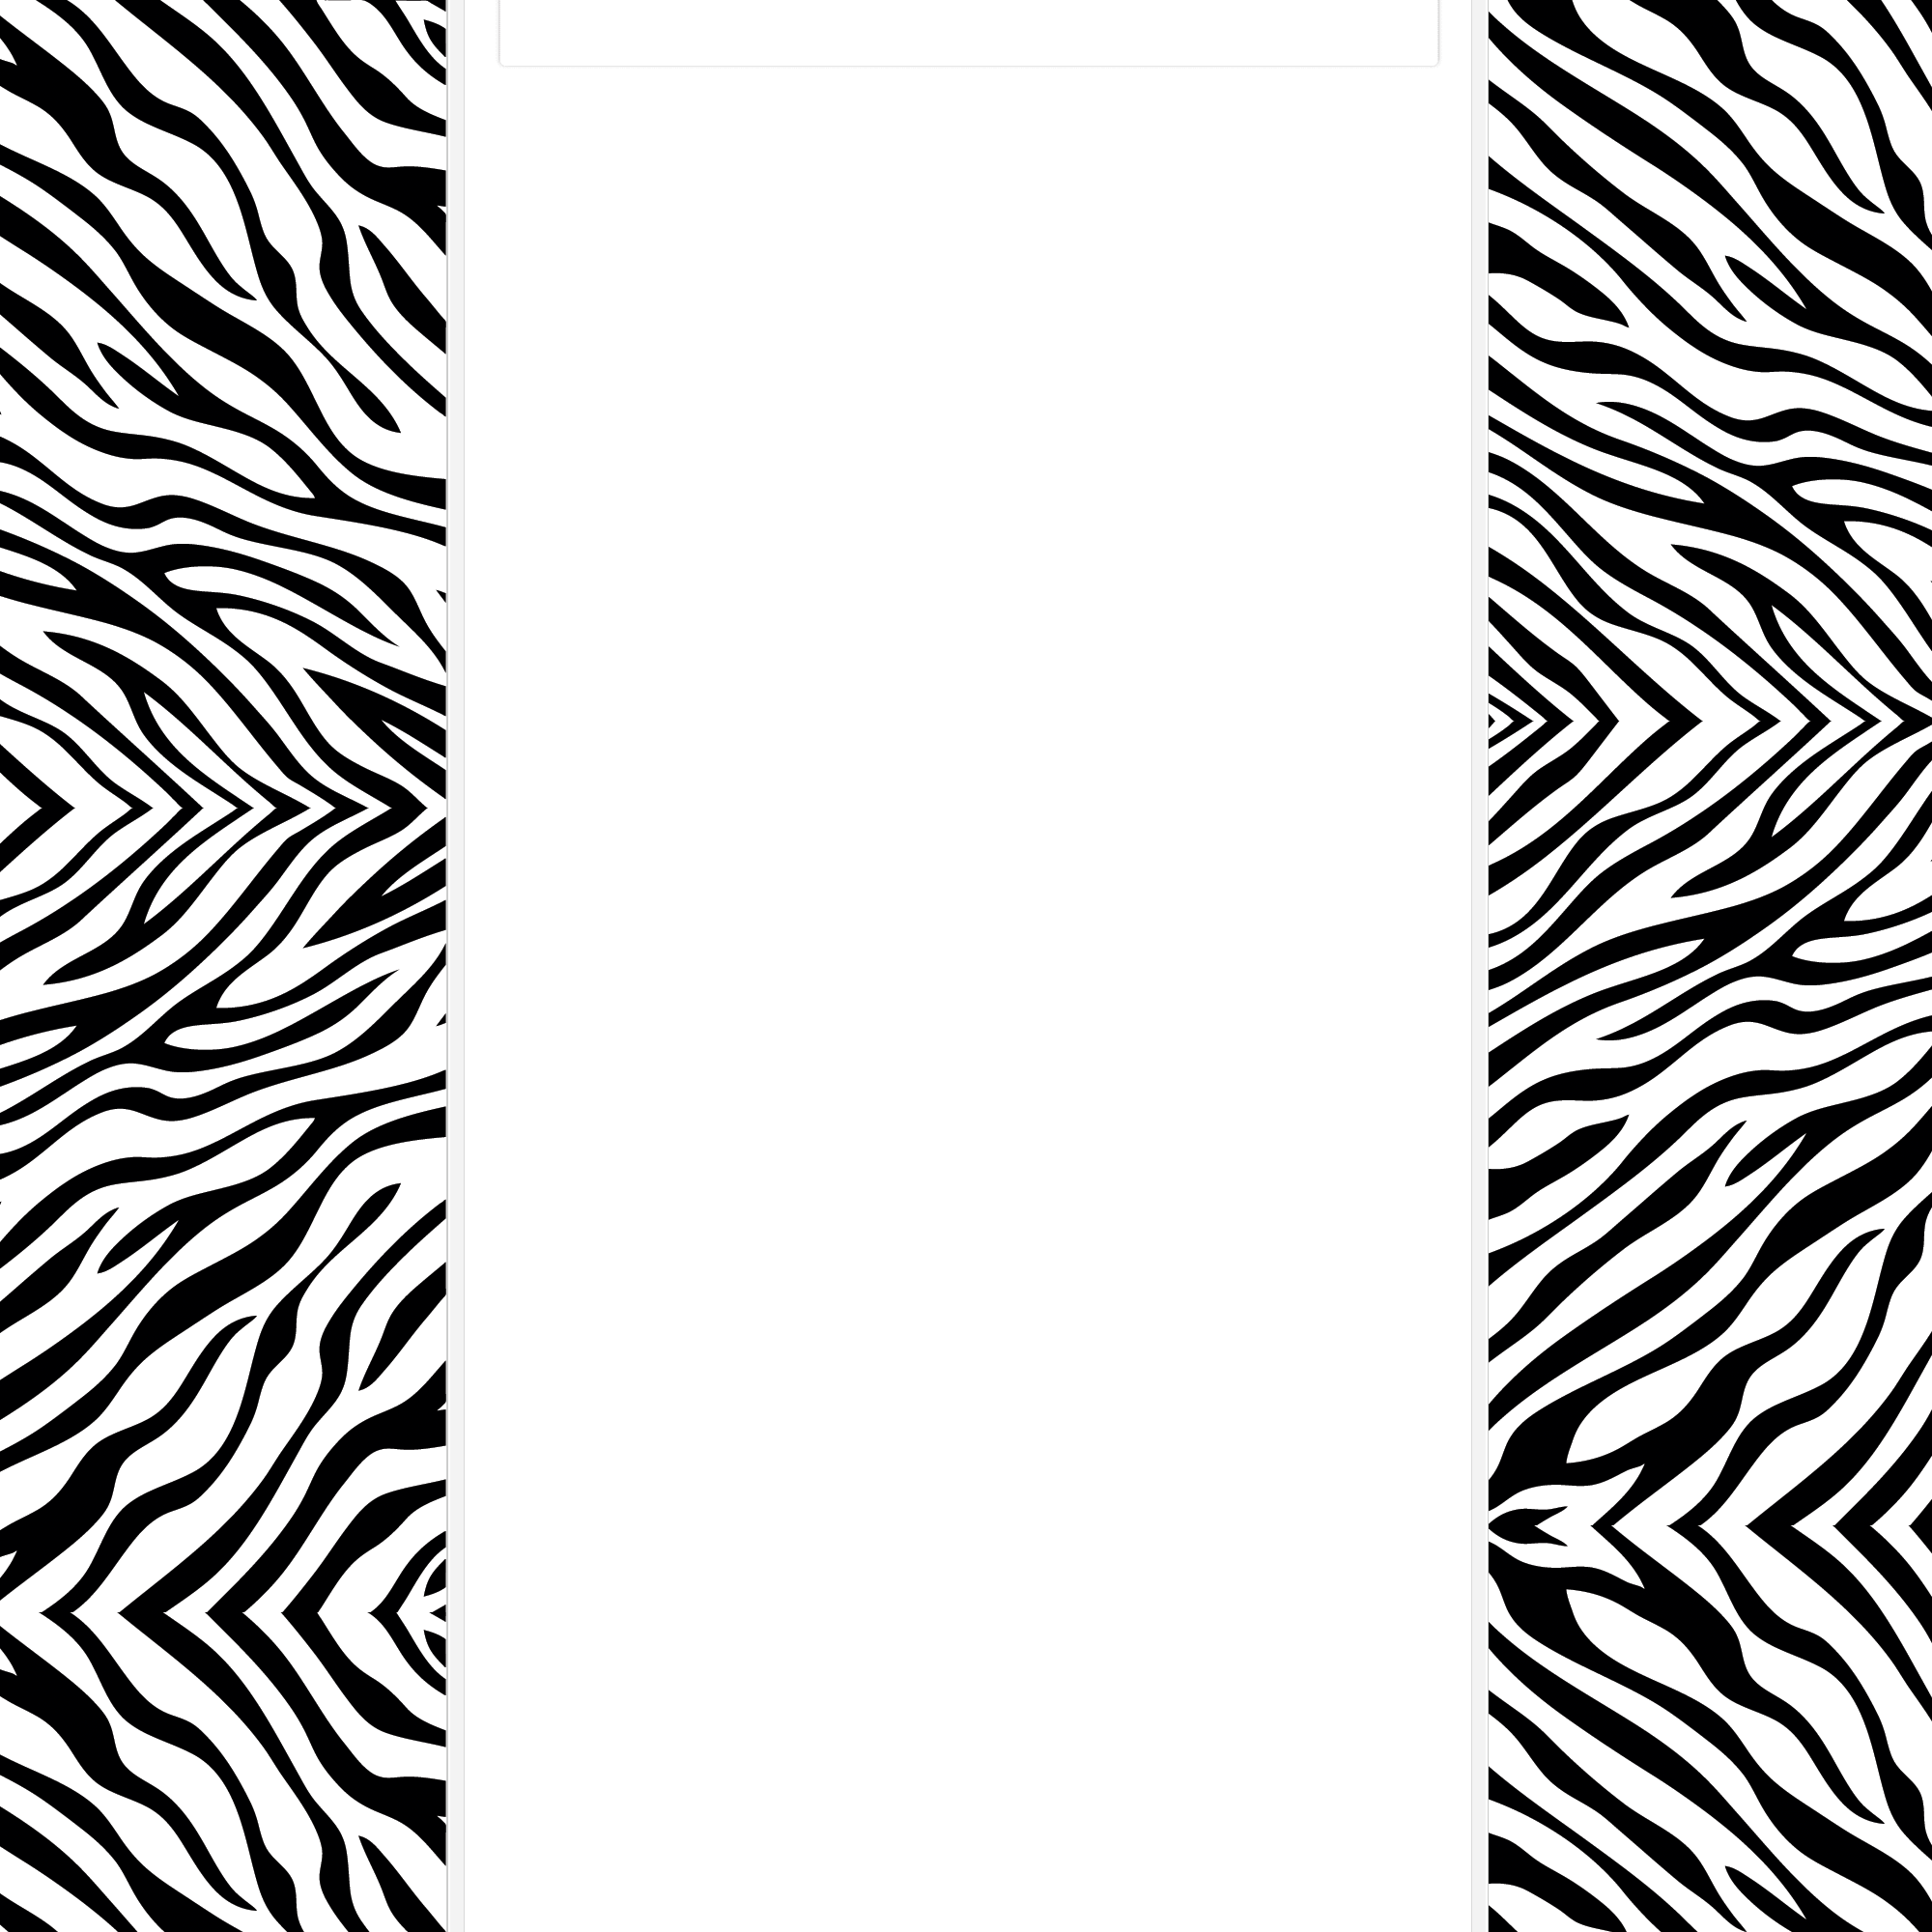 Zebra Print Clipart | Clipart Panda - Free Clipart Images